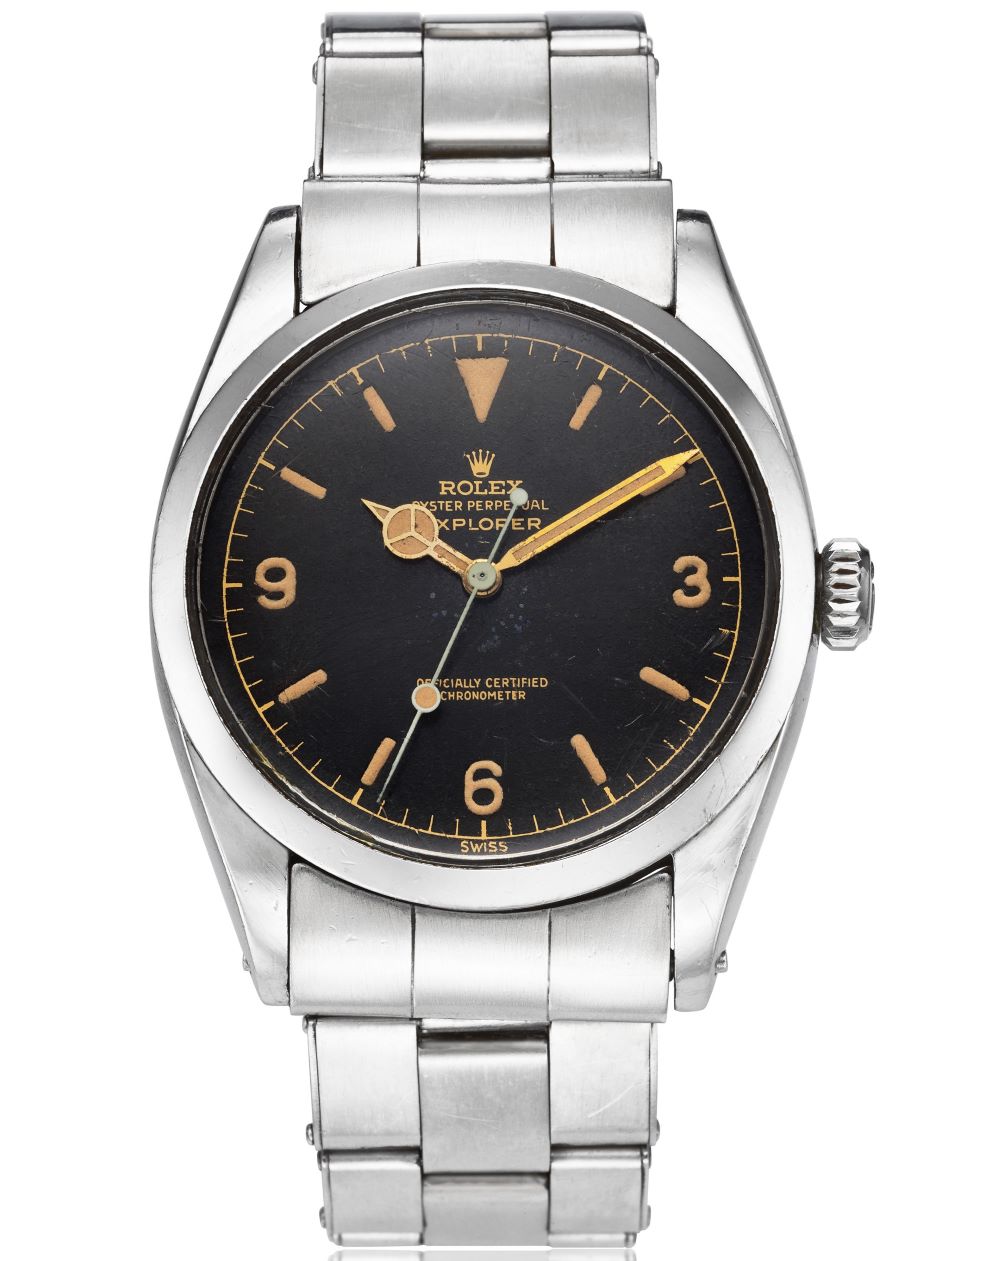 Đồng hồ Rolex Explorer Ref. 6610